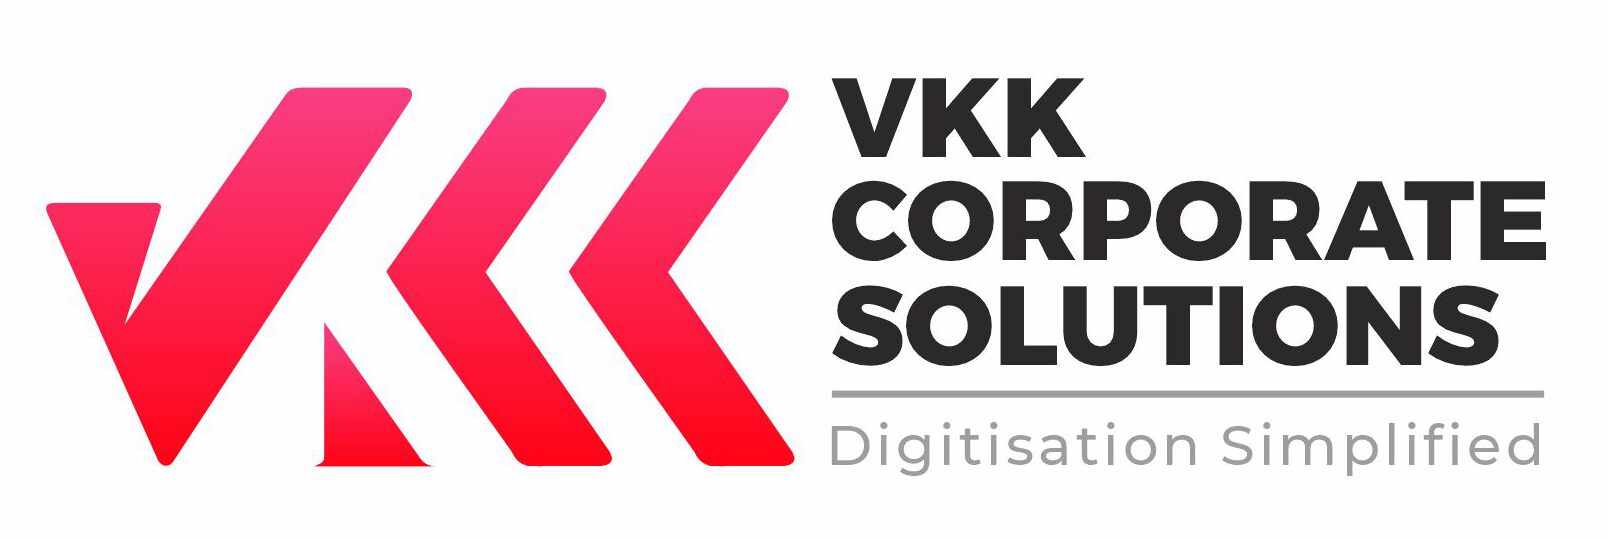 VKK-Digital-Signature-Services